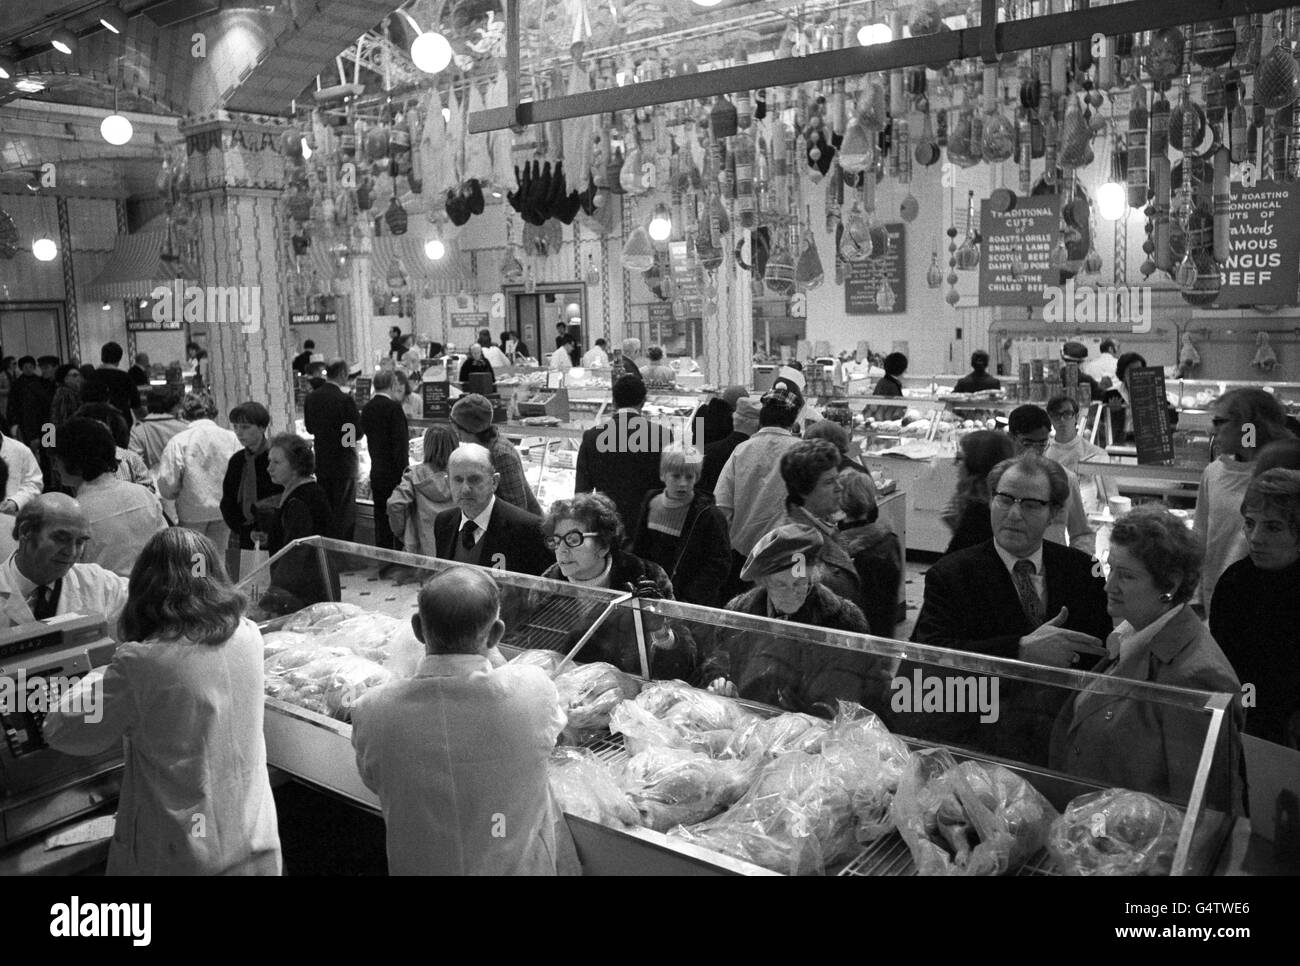 Harrods food hall knightsbridge london Black and White Stock Photos ...